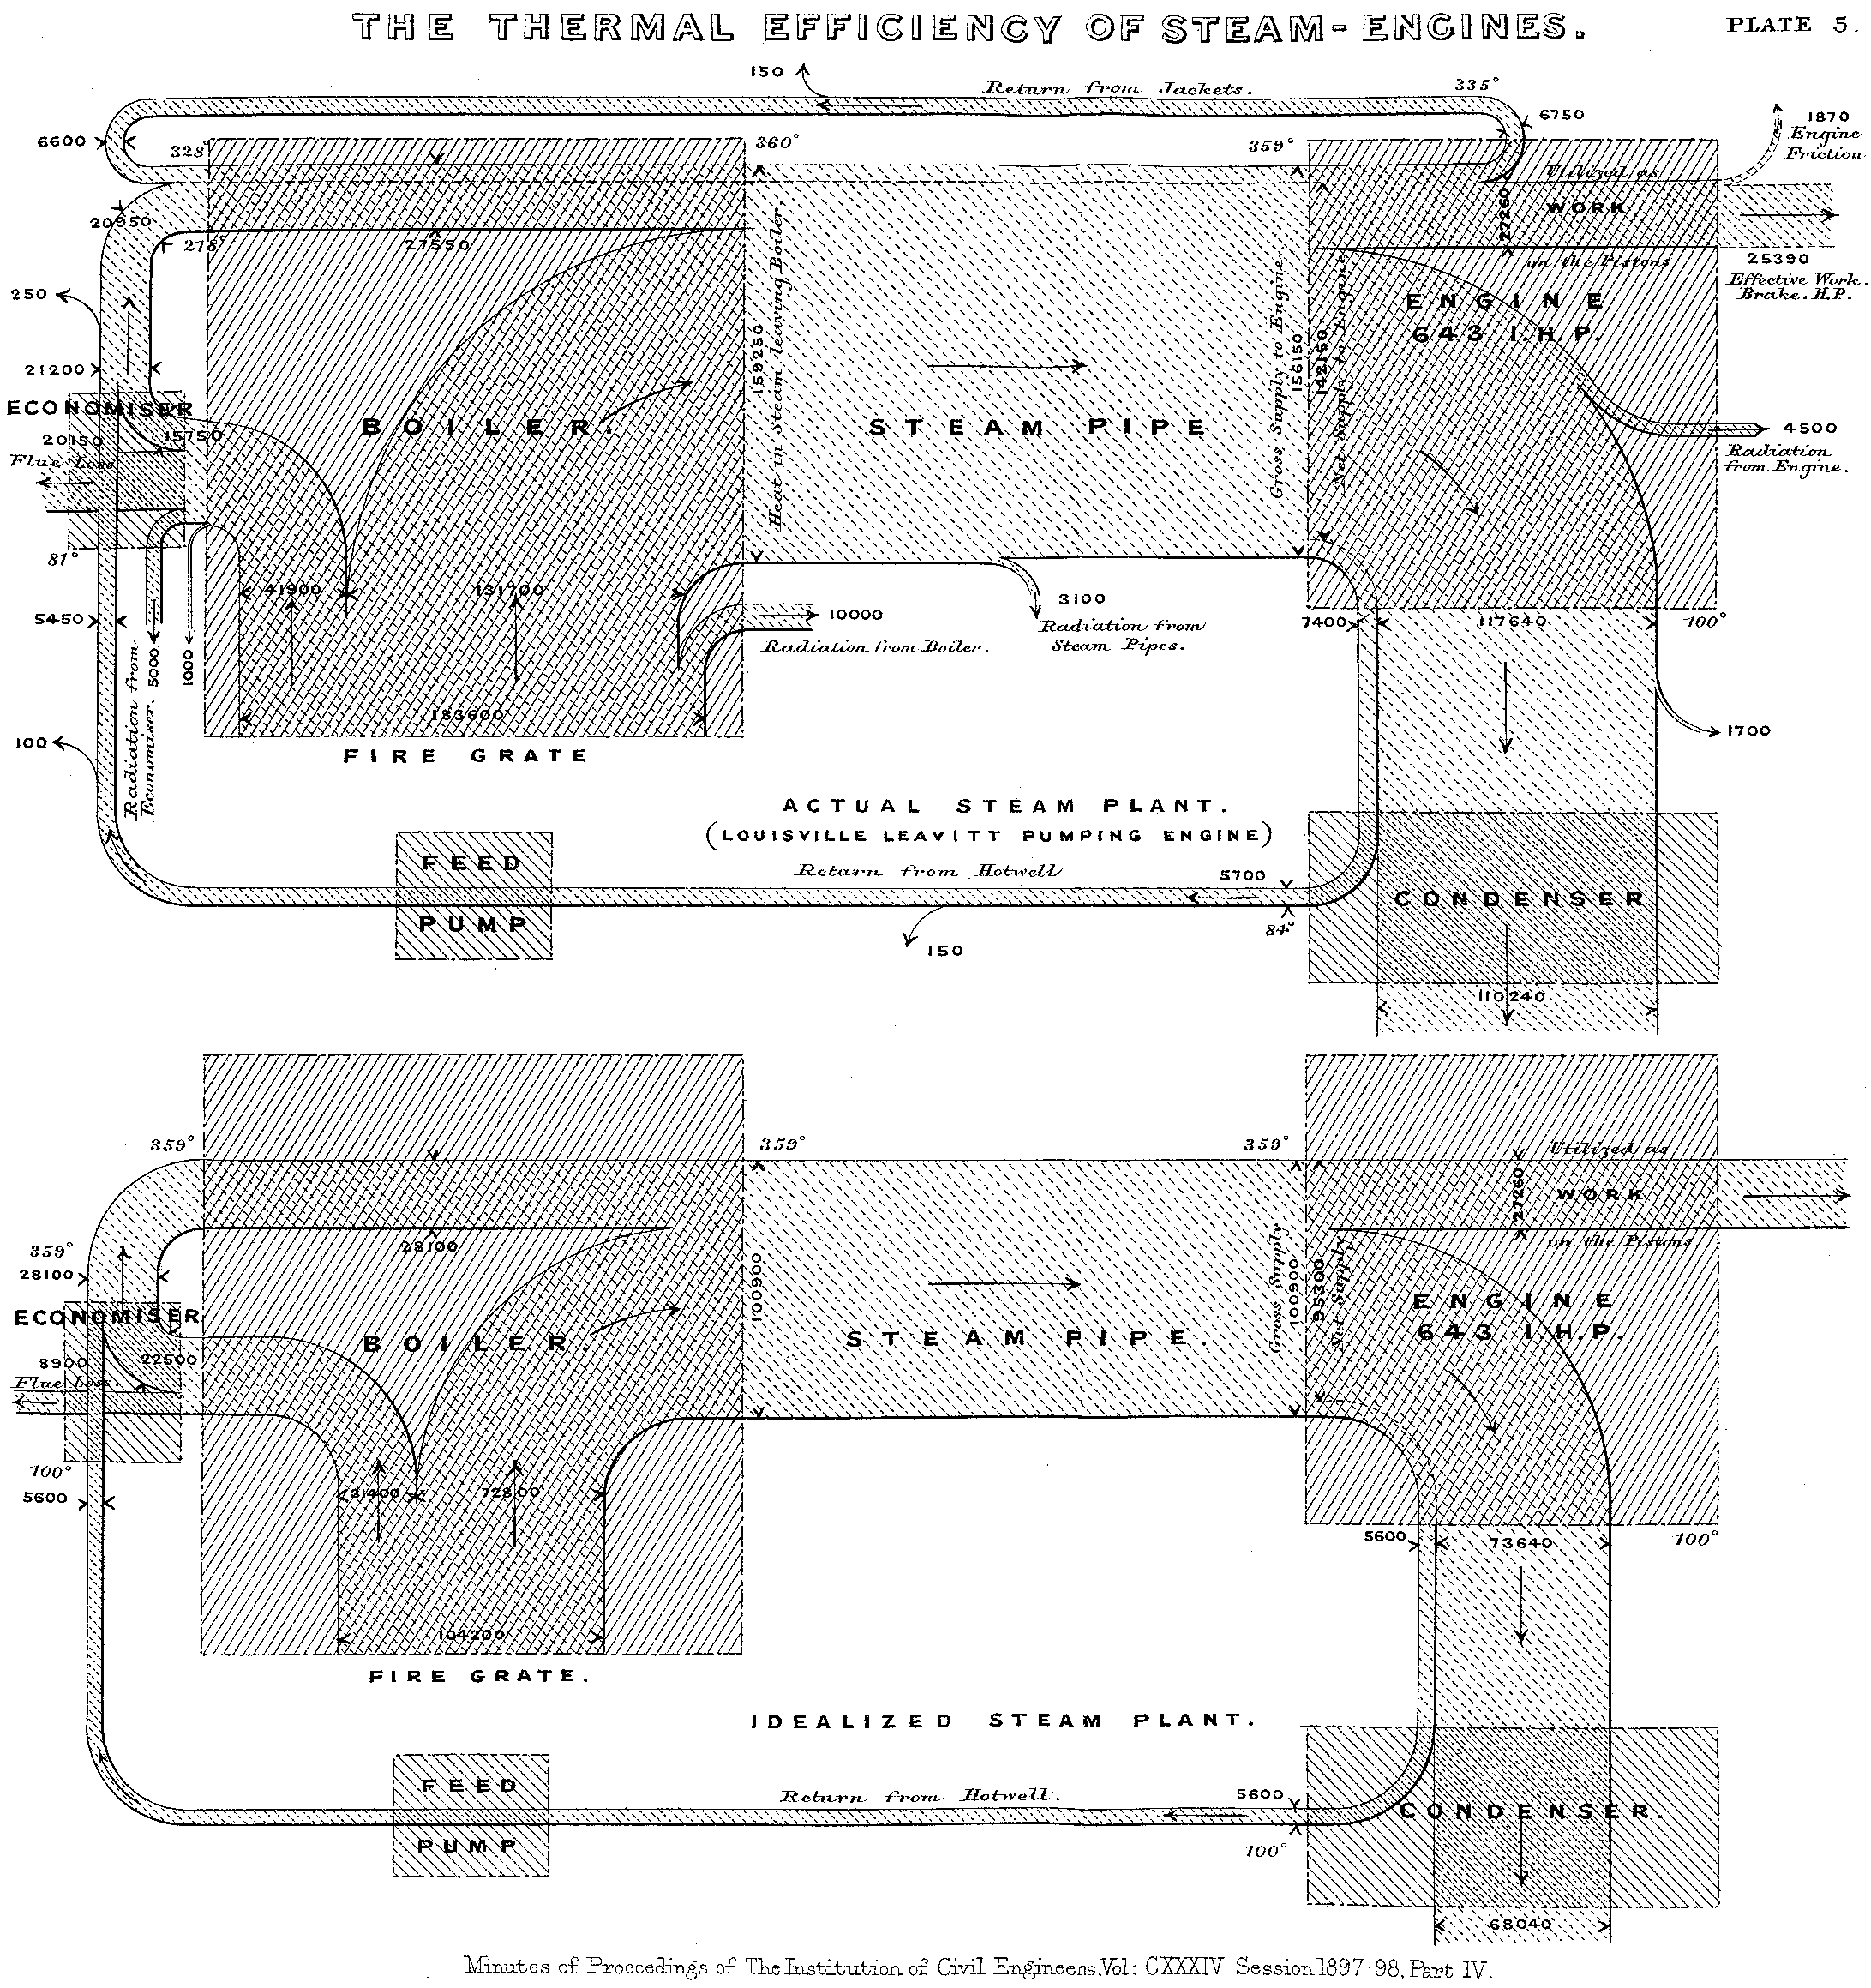 Sankey's original diagram